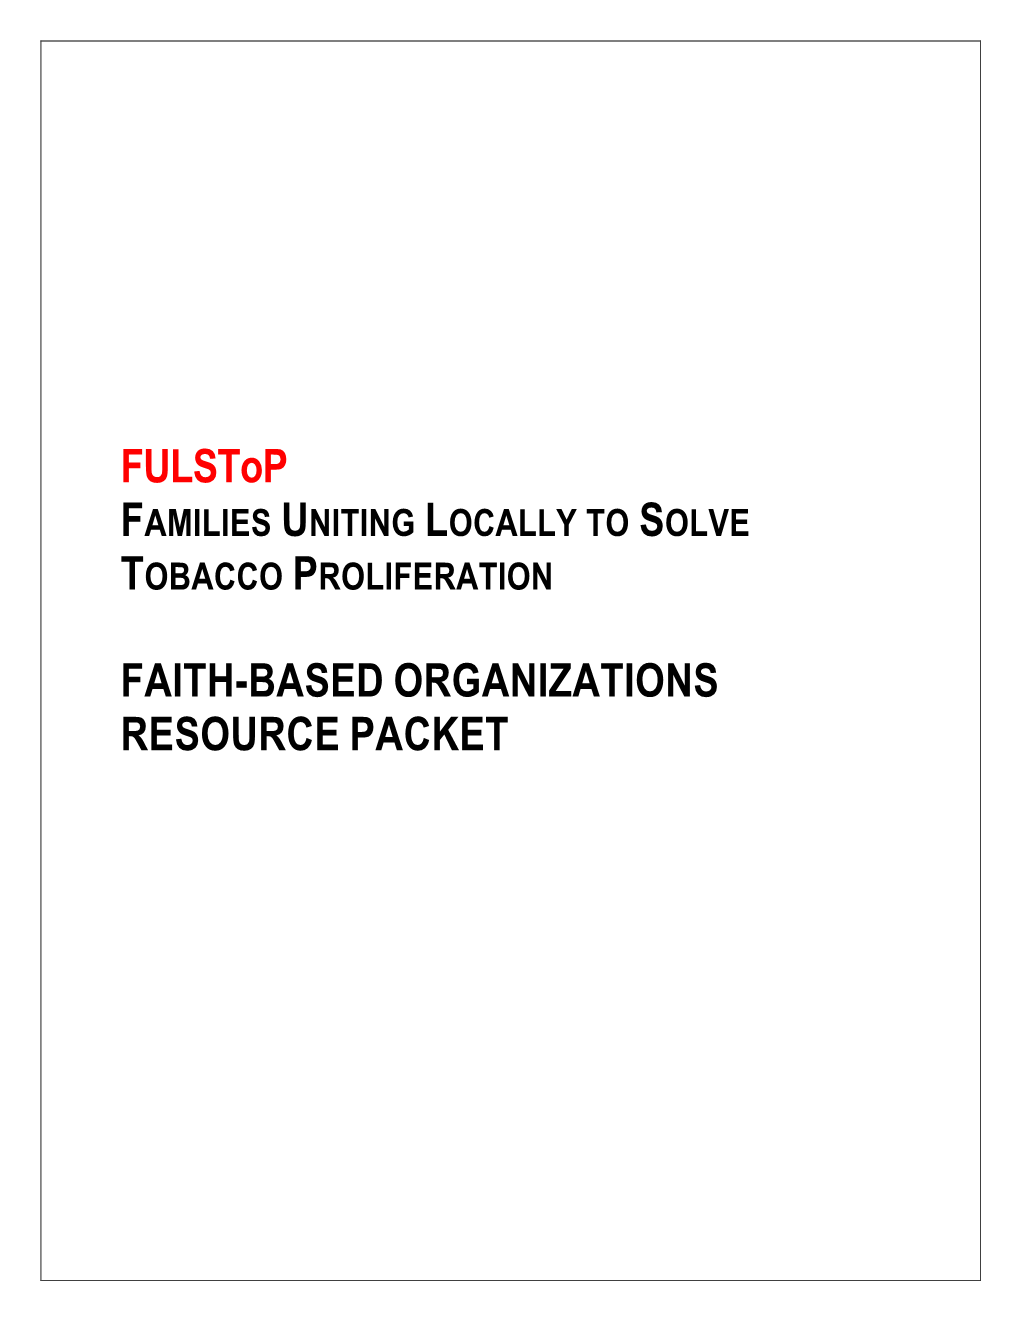 Fulstop FAITH-BASED ORGANIZATIONS RESOURCE